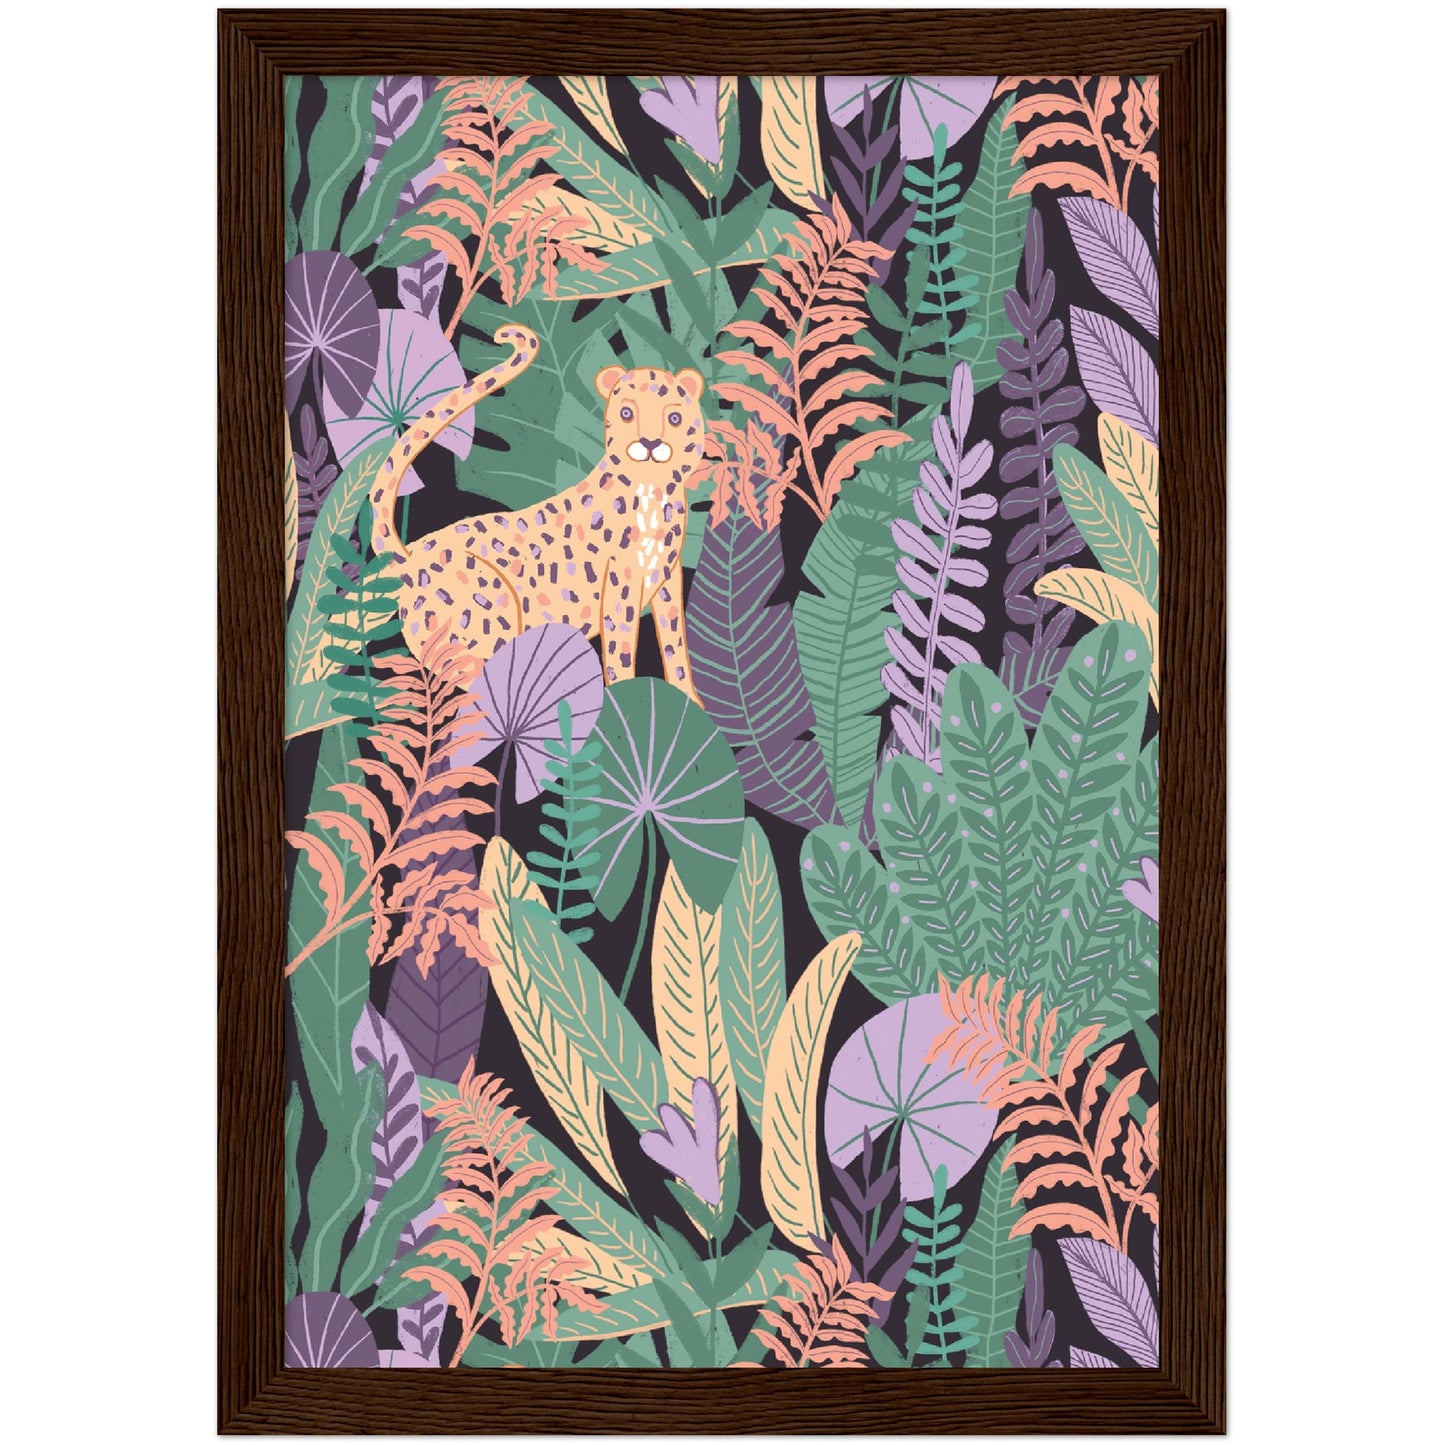 Jungle Life Print